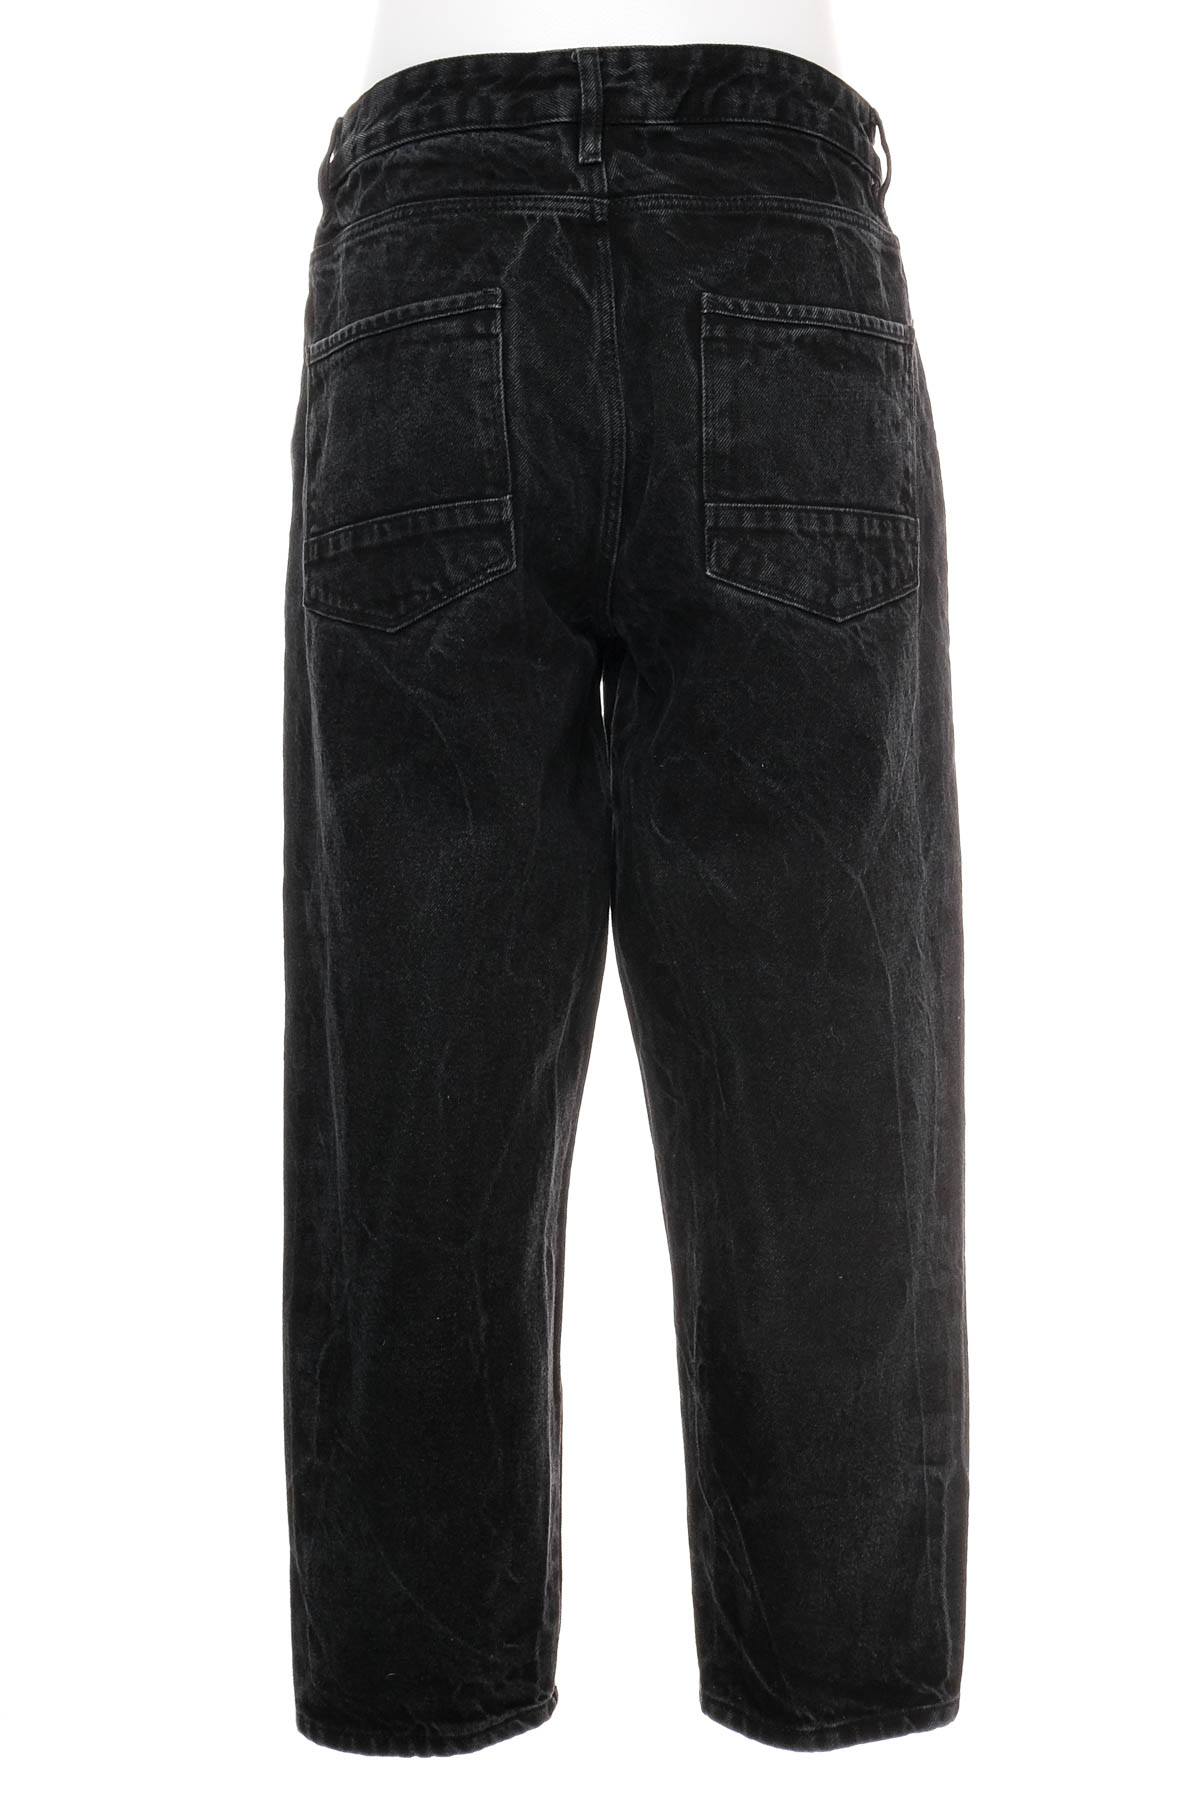 Men's jeans - Asos - 1